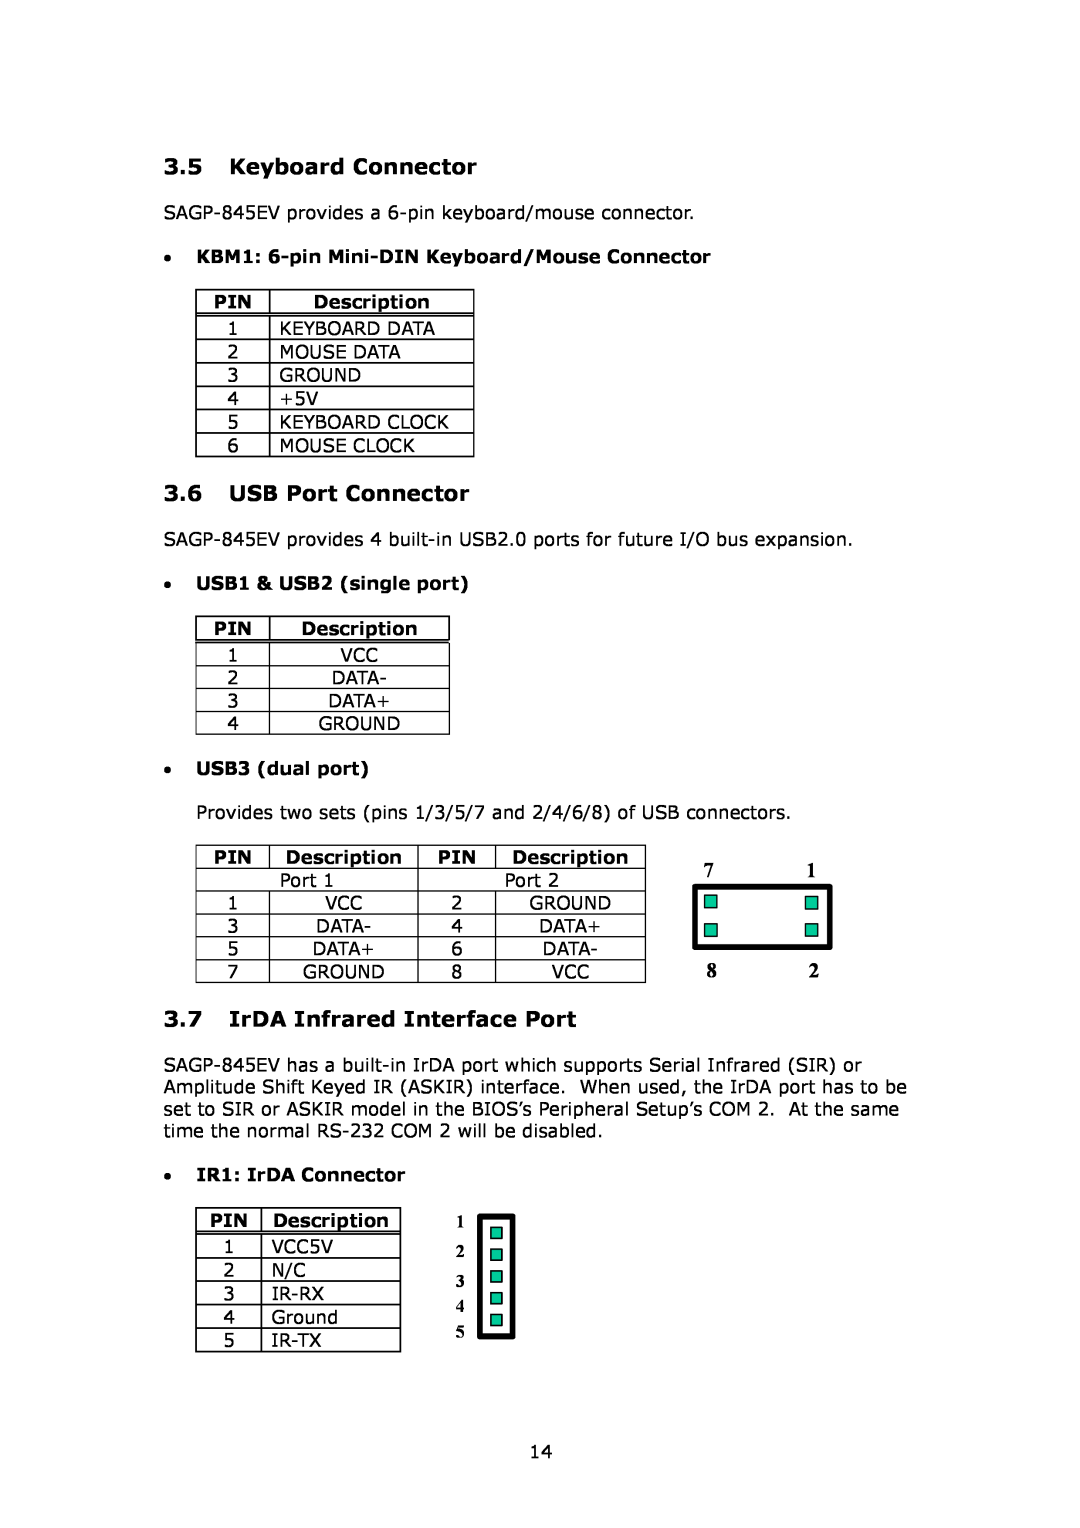 IBM SAGP-845EV Keyboard Connector, USB Port Connector, IrDA Infrared Interface Port, USB1 & USB2 single port, Description 